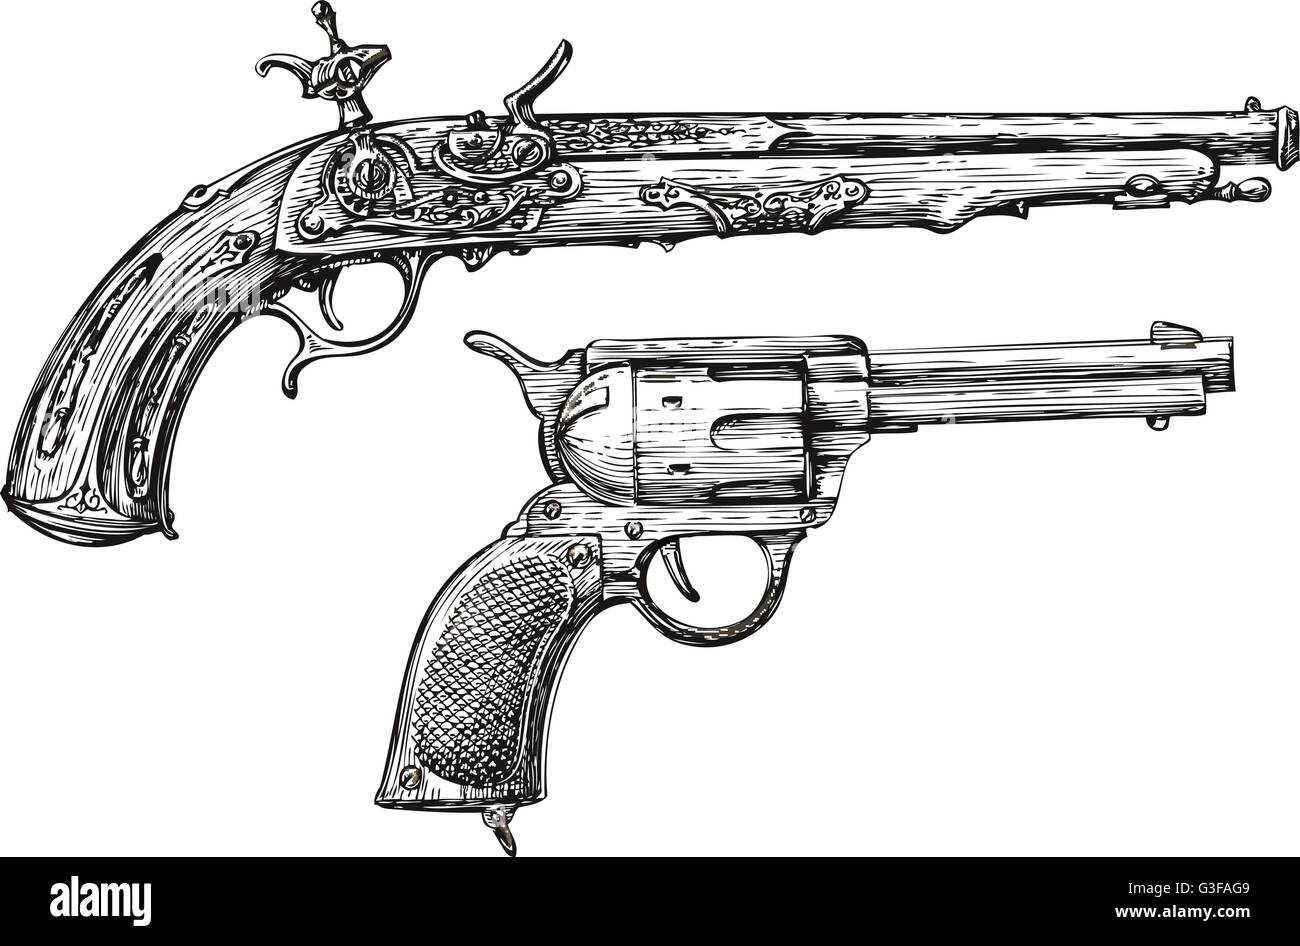 Vintage Gun. Retro Pistol, Musket. Hand-drawn sketch of a Revolver, Weapon, Firearm Stock Vector